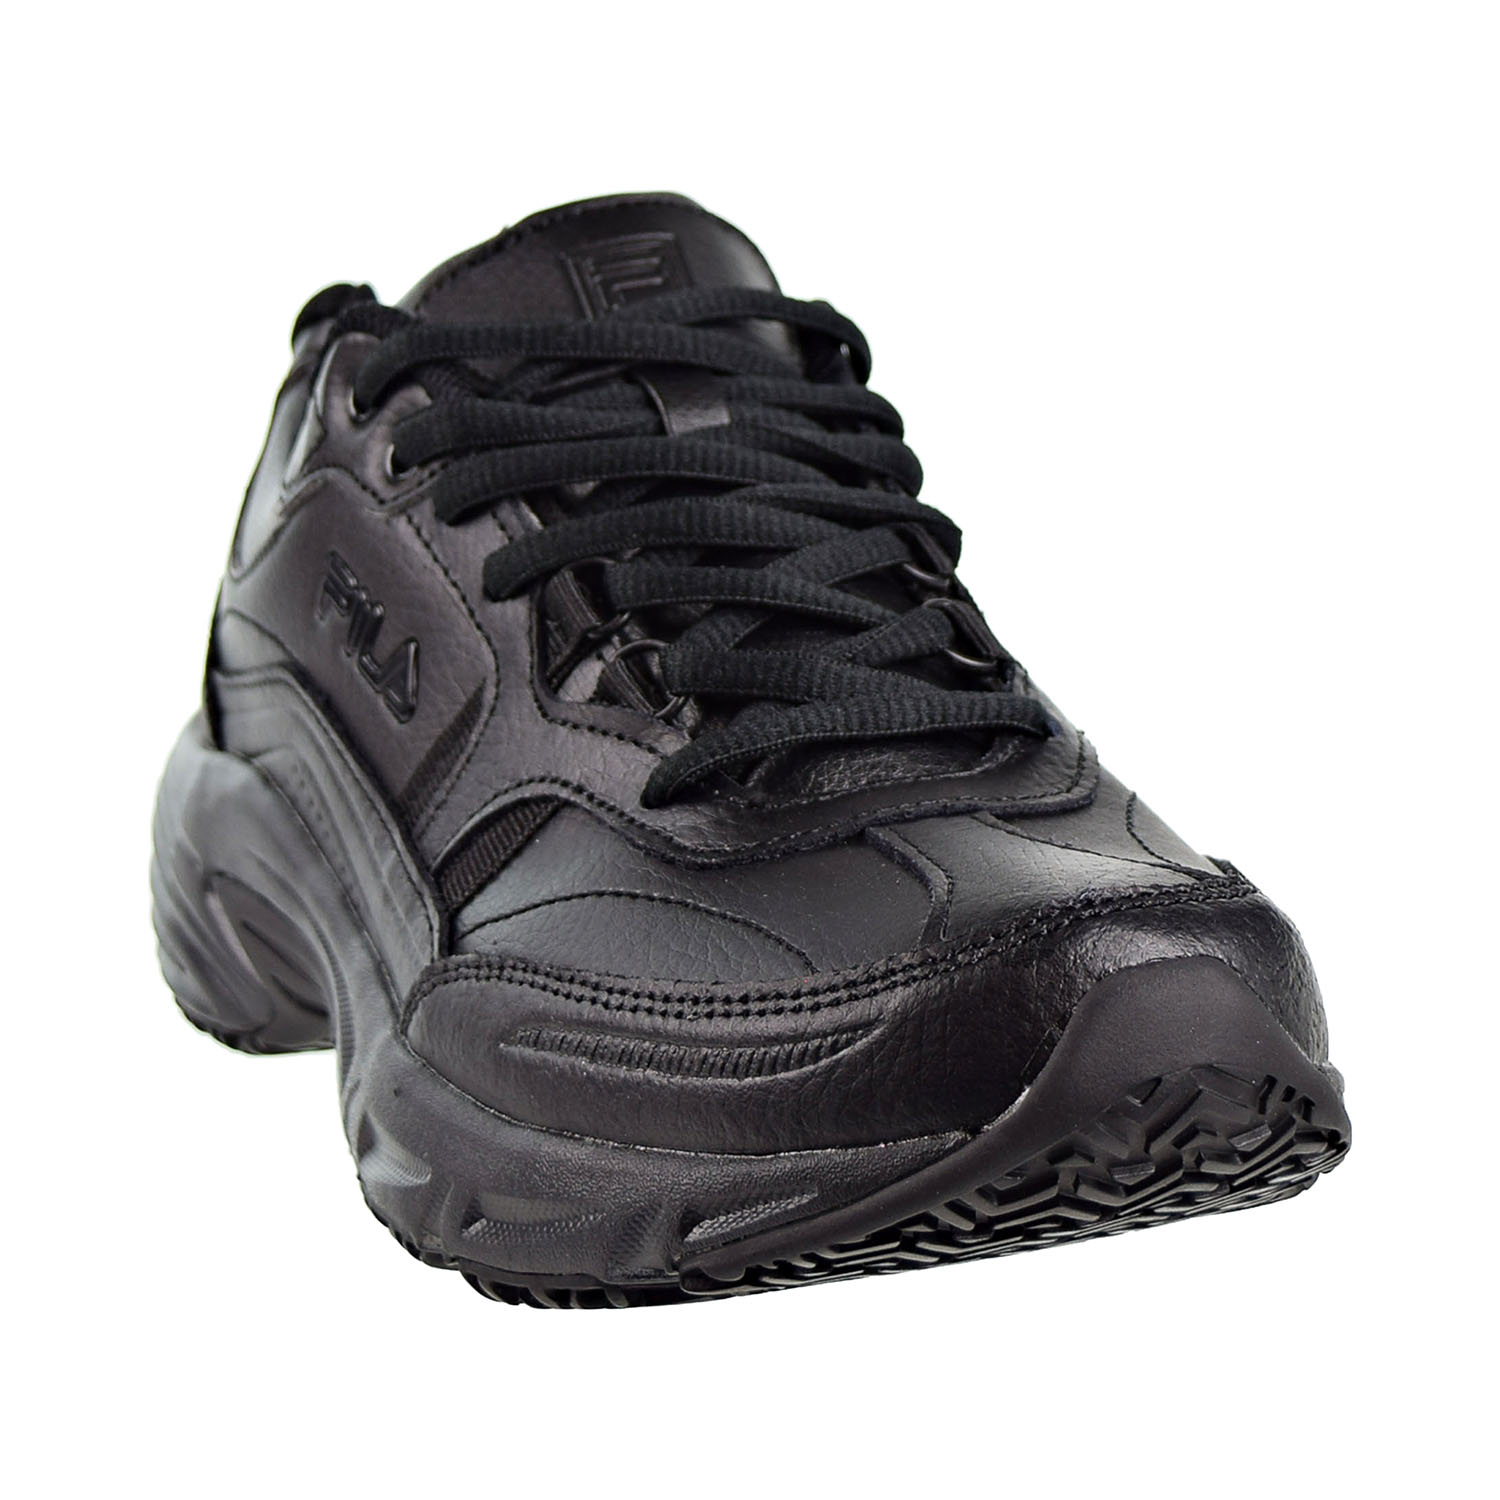 Fila Memory Workshift Slip Resistant Men's Shoes Black 1SG30002-001 | eBay